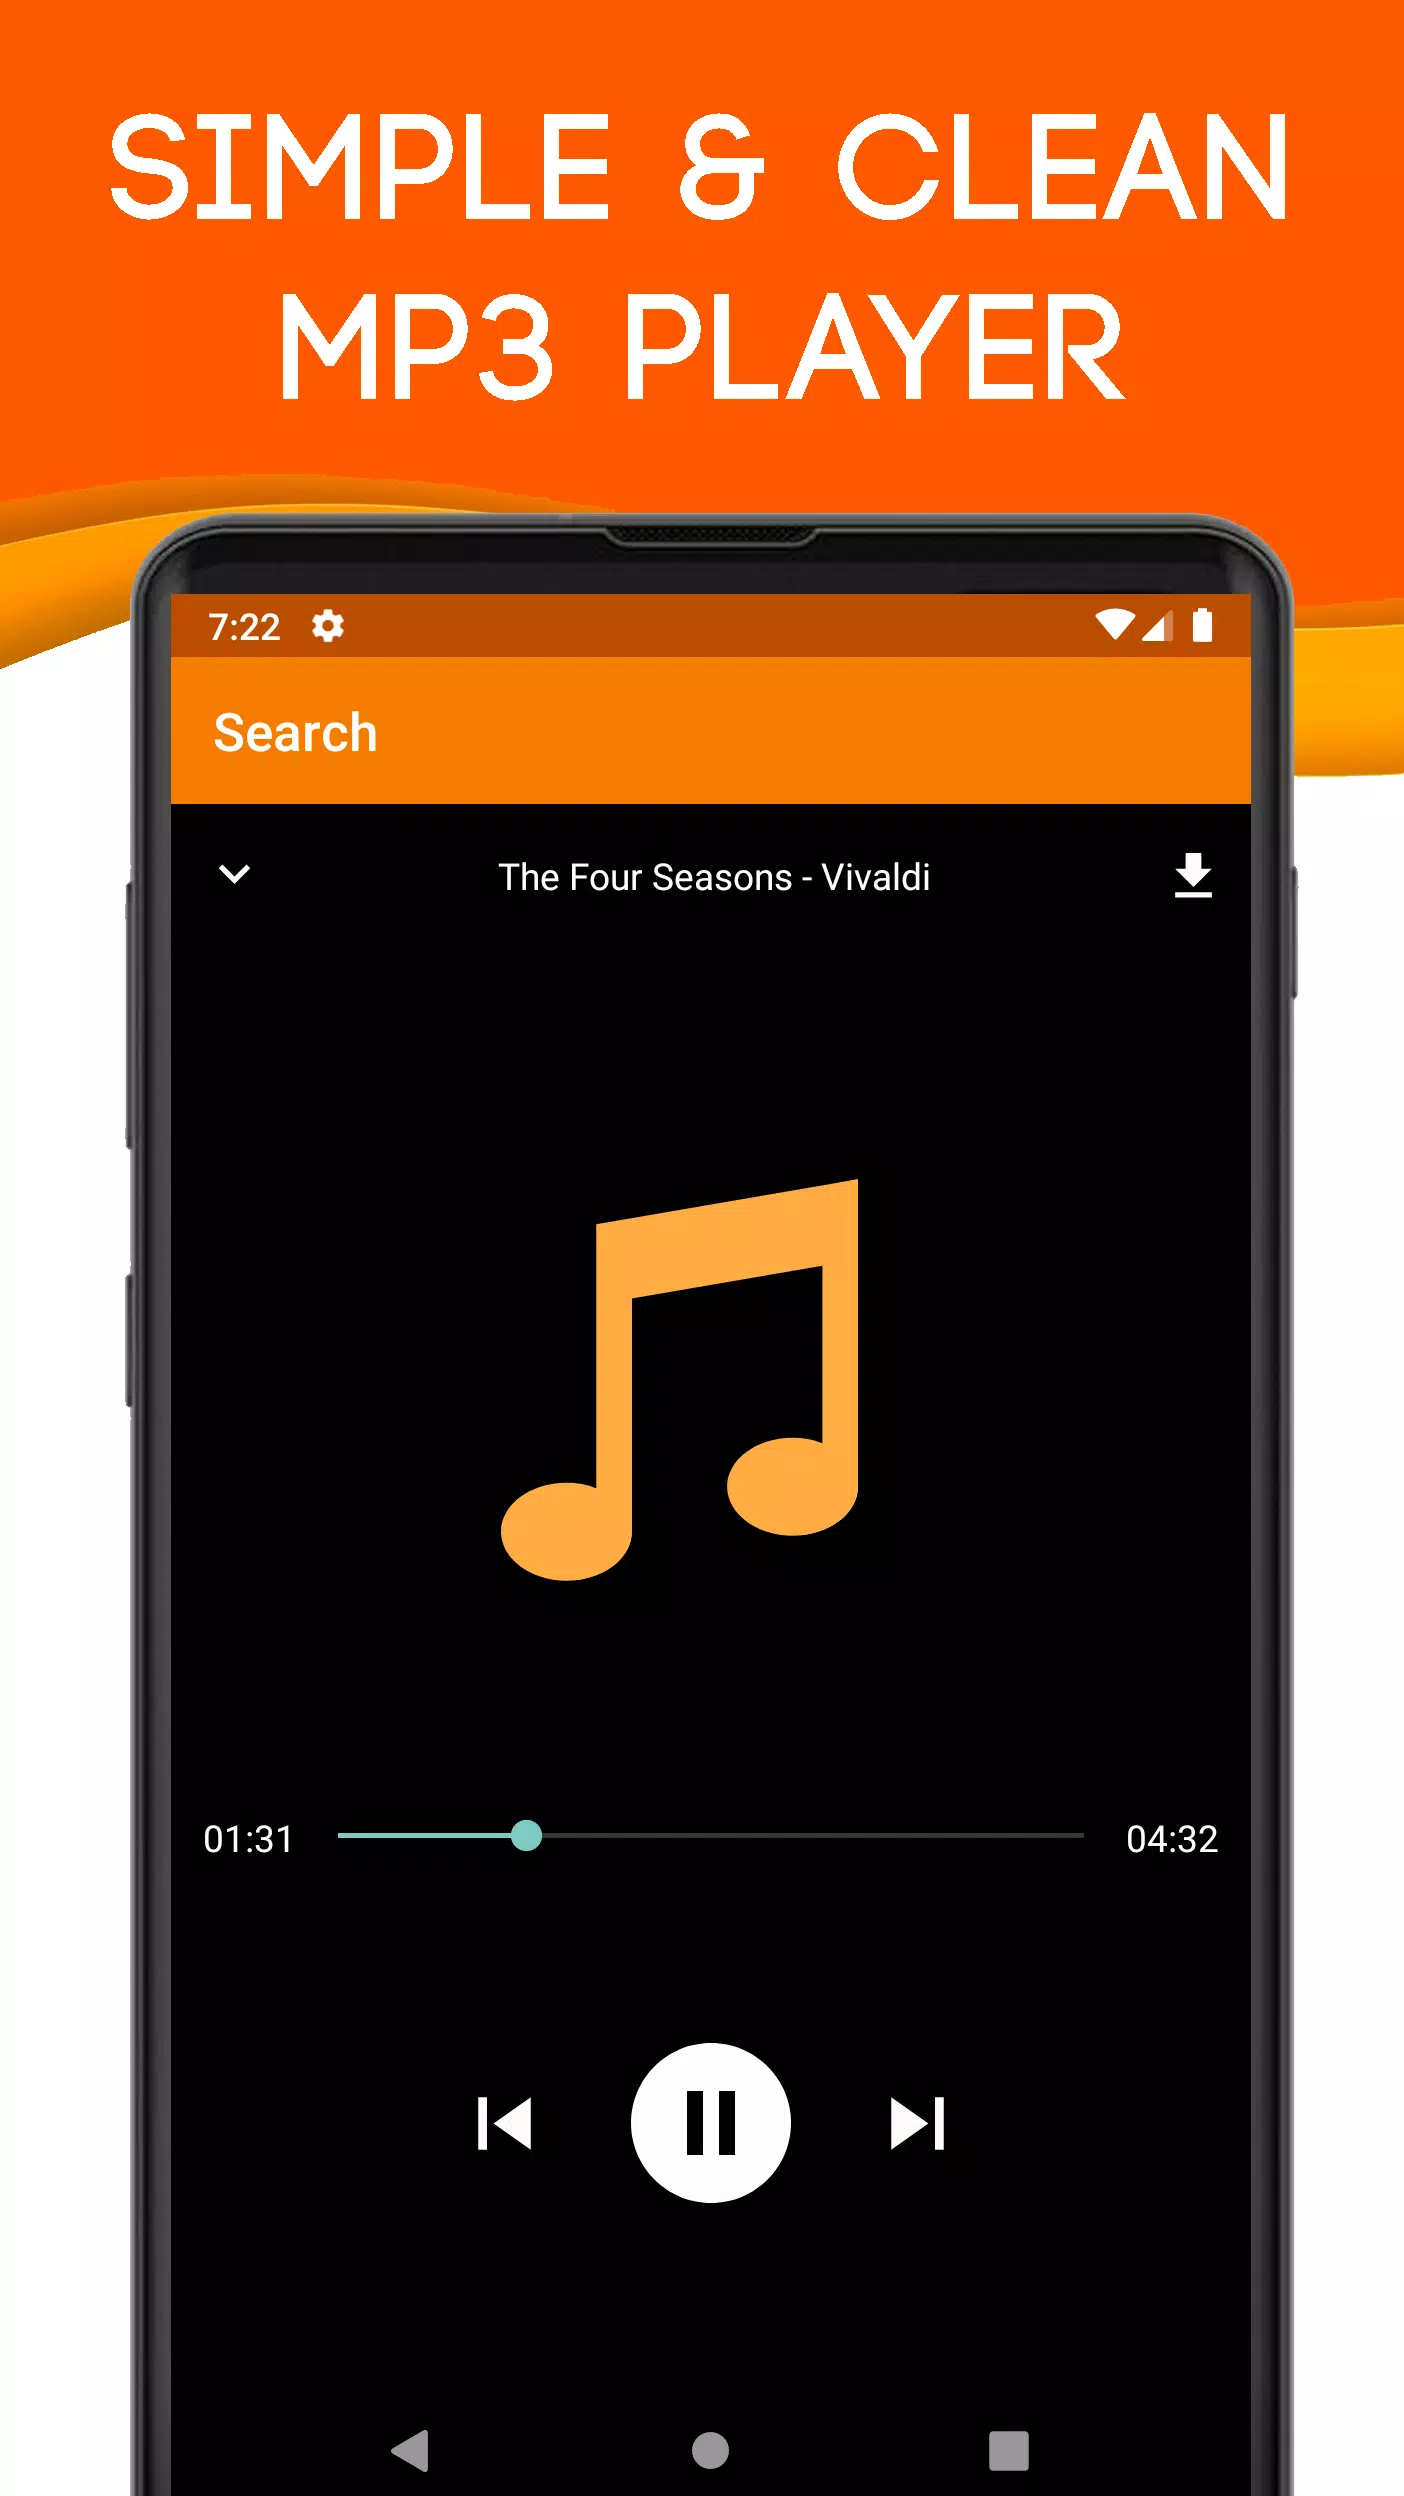 Baixar músicas MP3 Grátis - TubePlay Mp3 Download for Android - APK Download